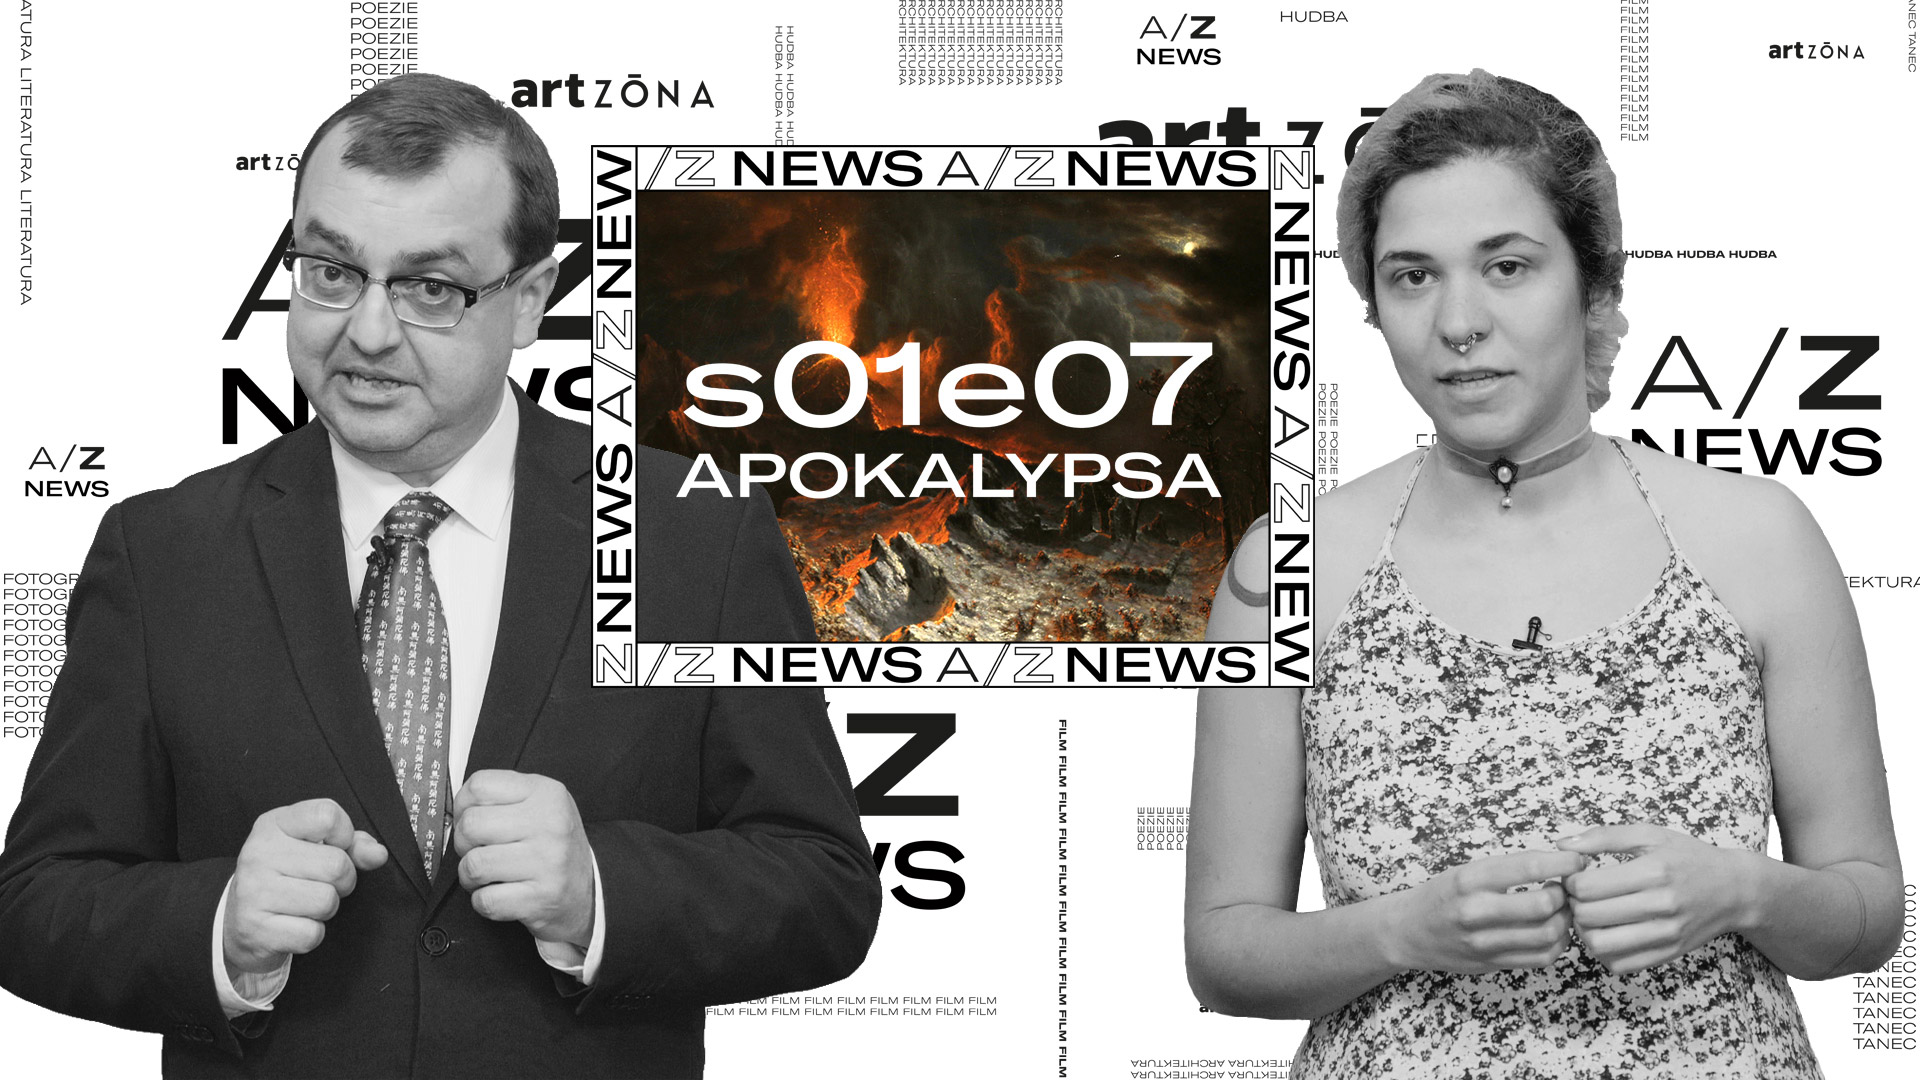 A/ZNews S01E07 APOKALYPSA